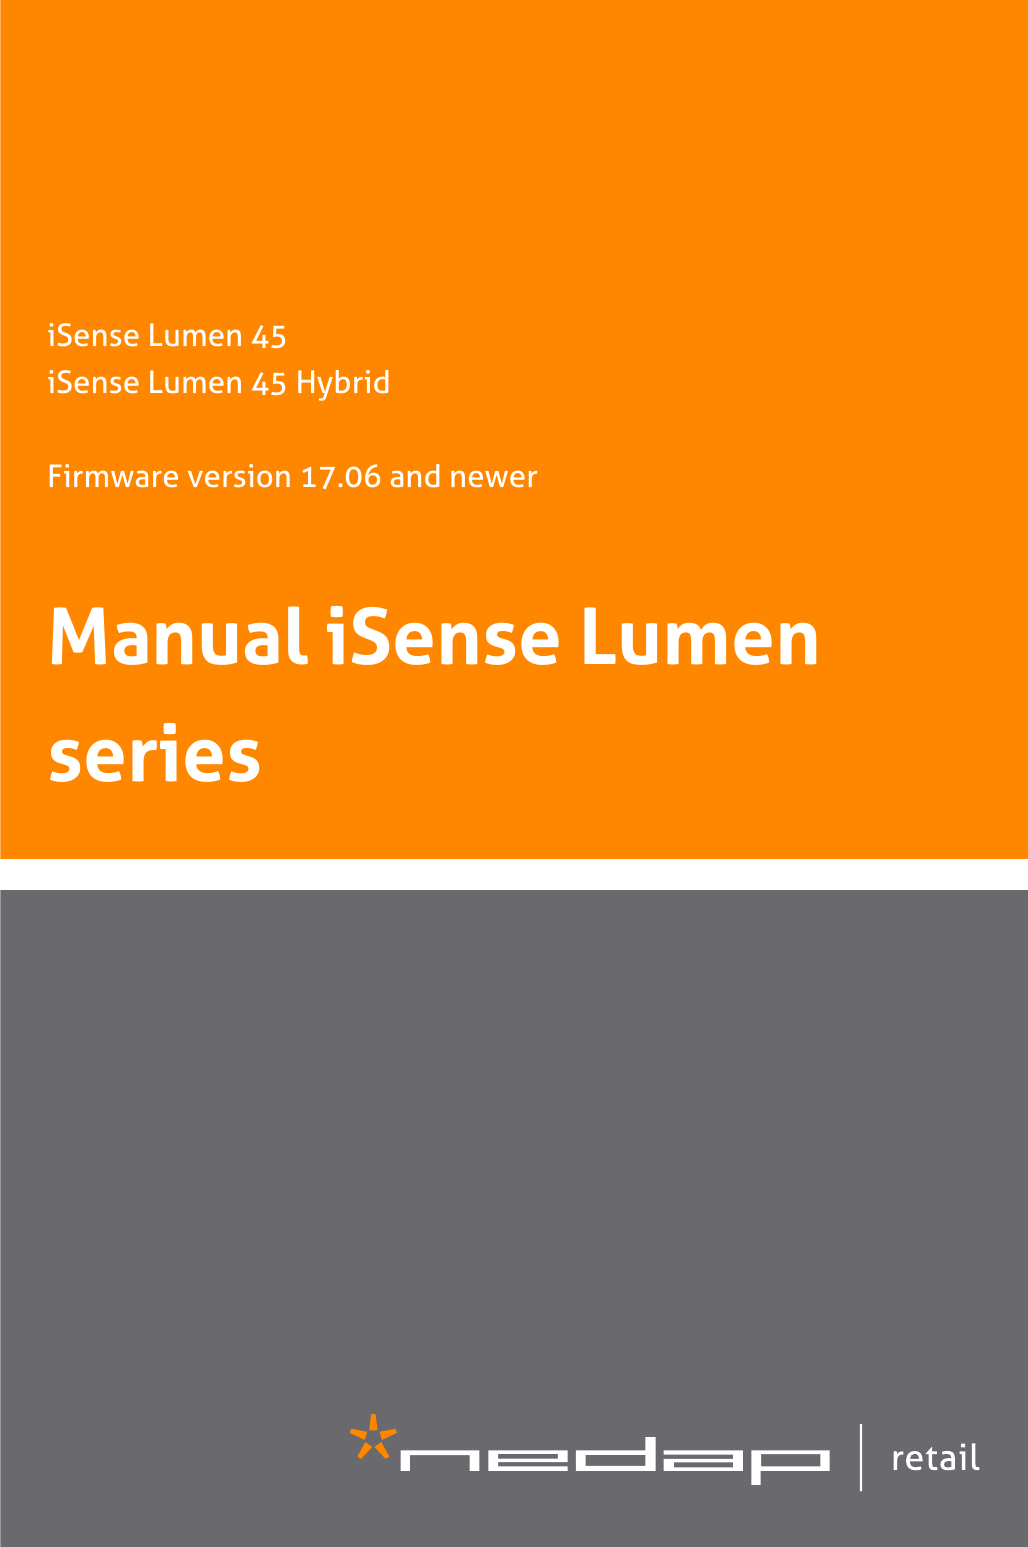 iSense Lumen 45iSense Lumen 45 HybridFirmware version 17.06 and newerManual iSense Lumenseries